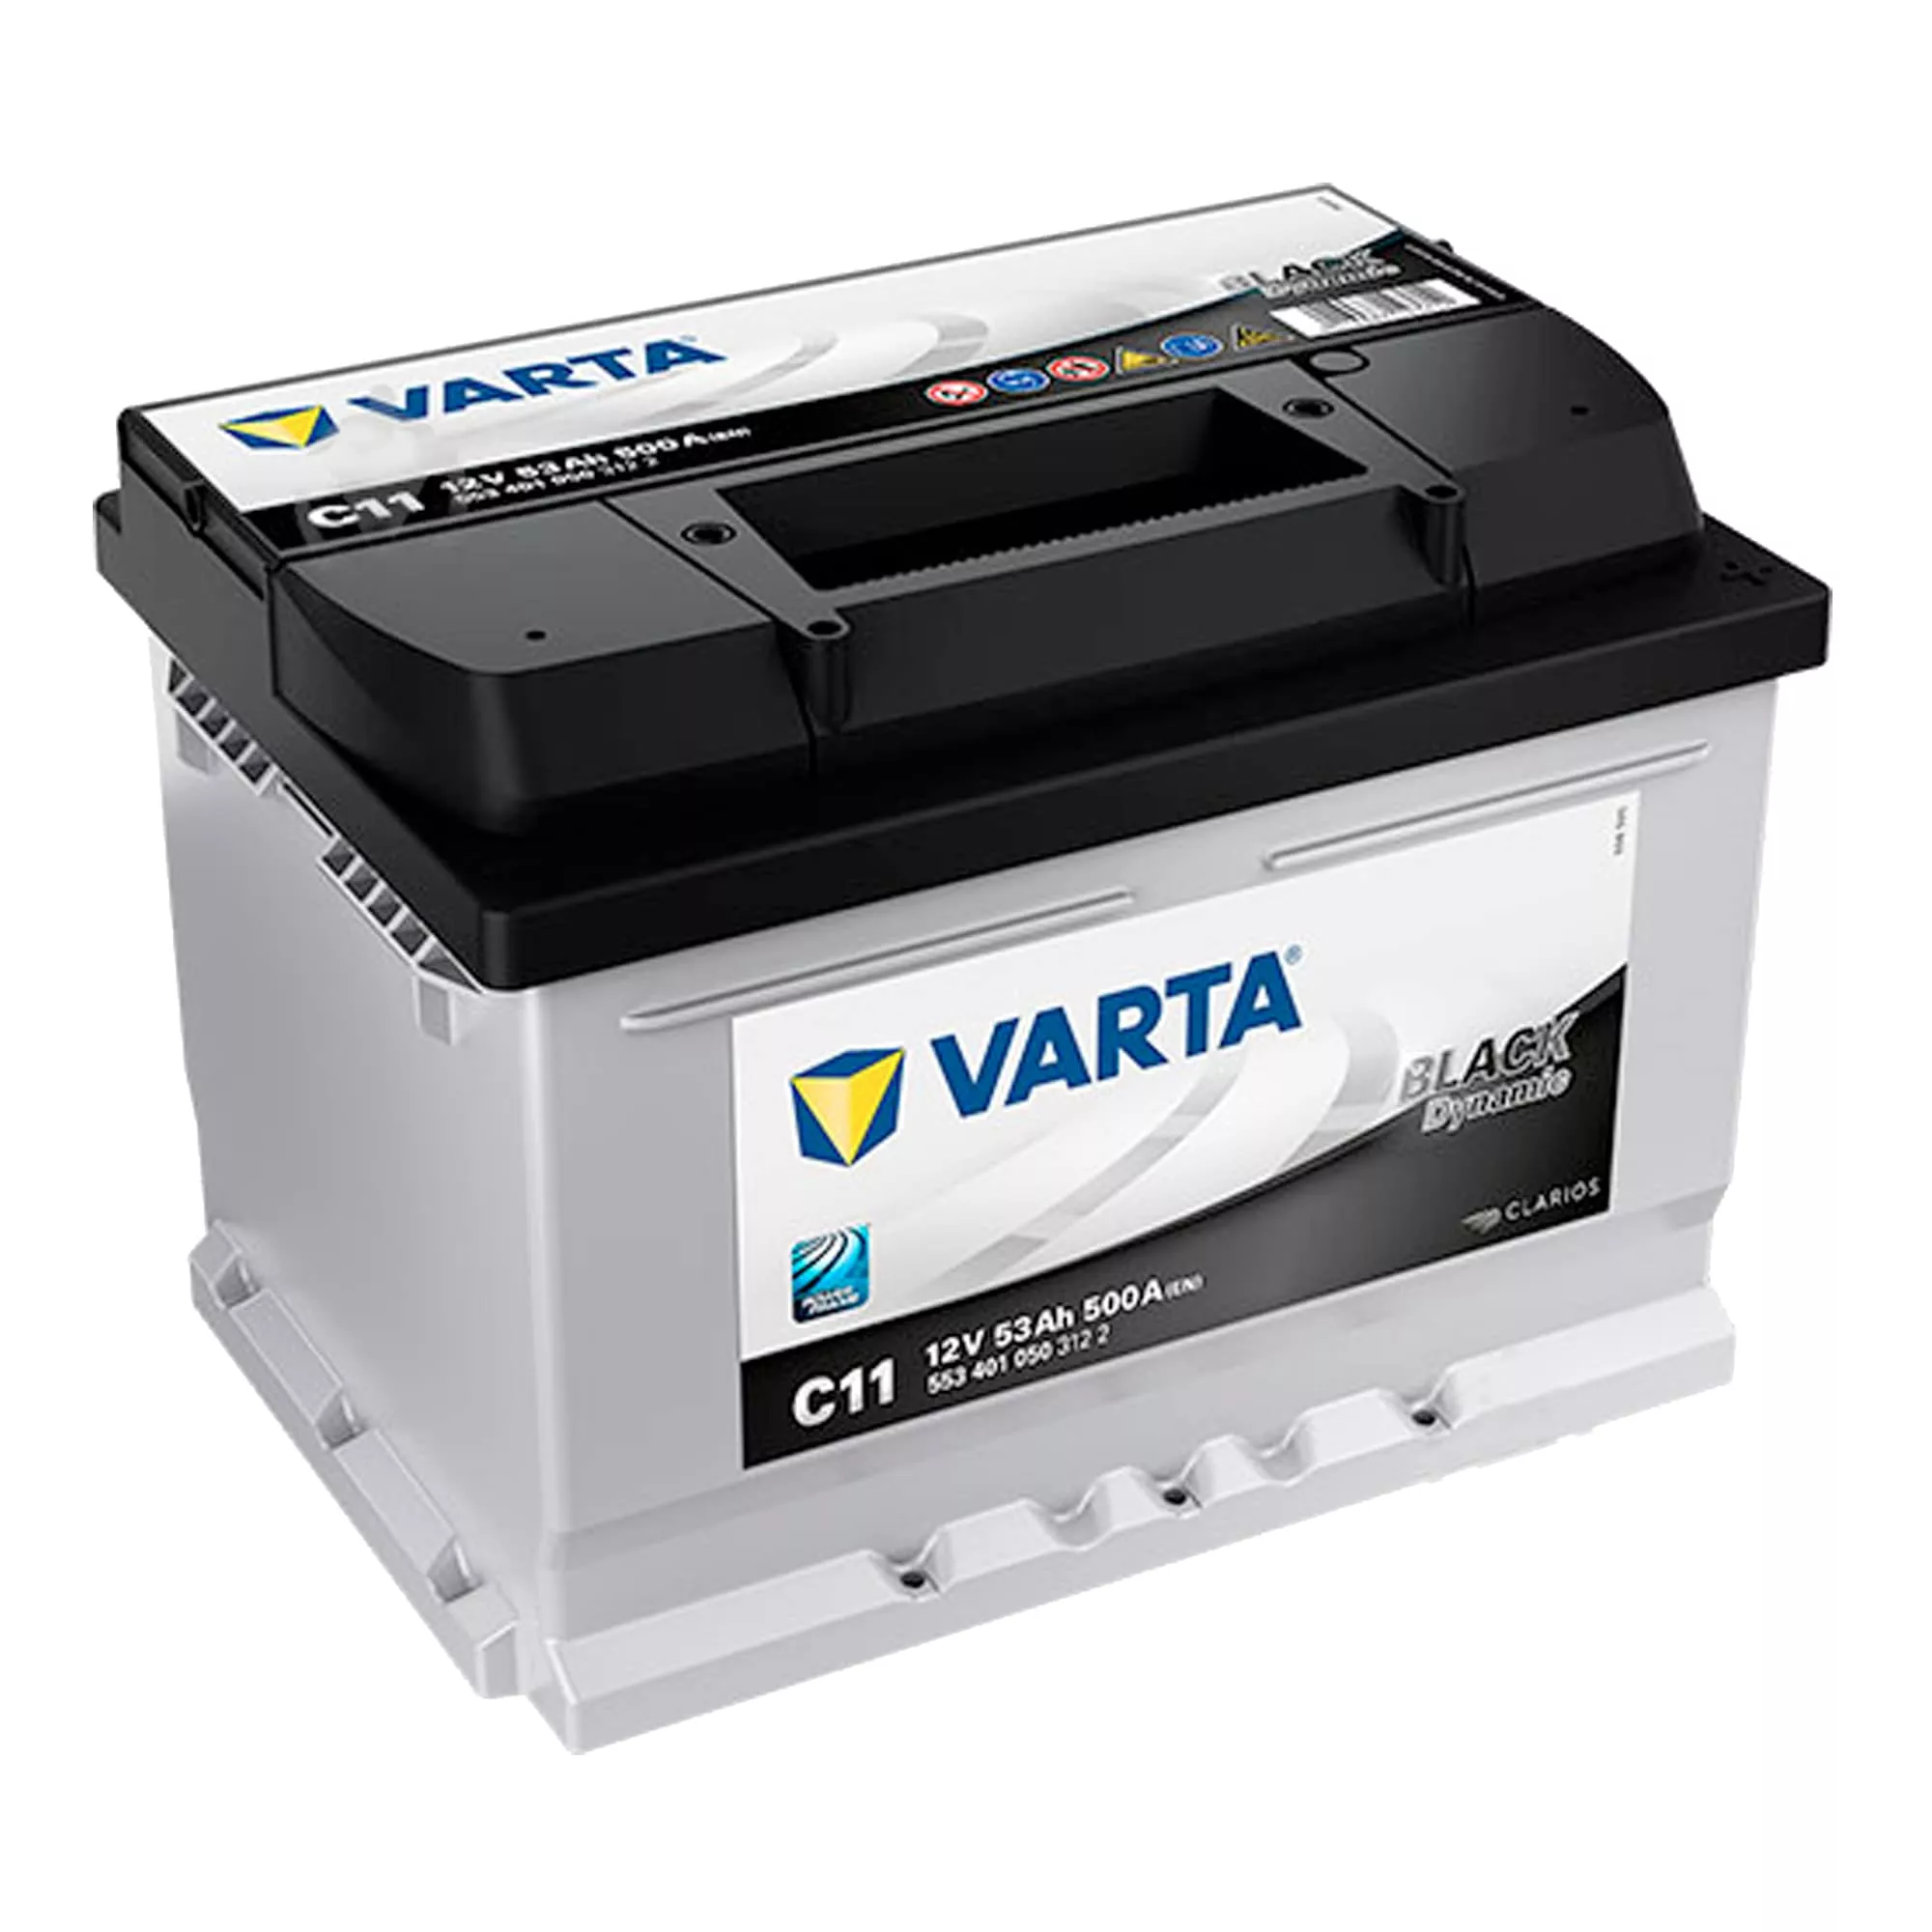 Автомобильный аккумулятор Varta Black Dynamic С11 6СТ-53Ah 500А АзЕ (553401050)